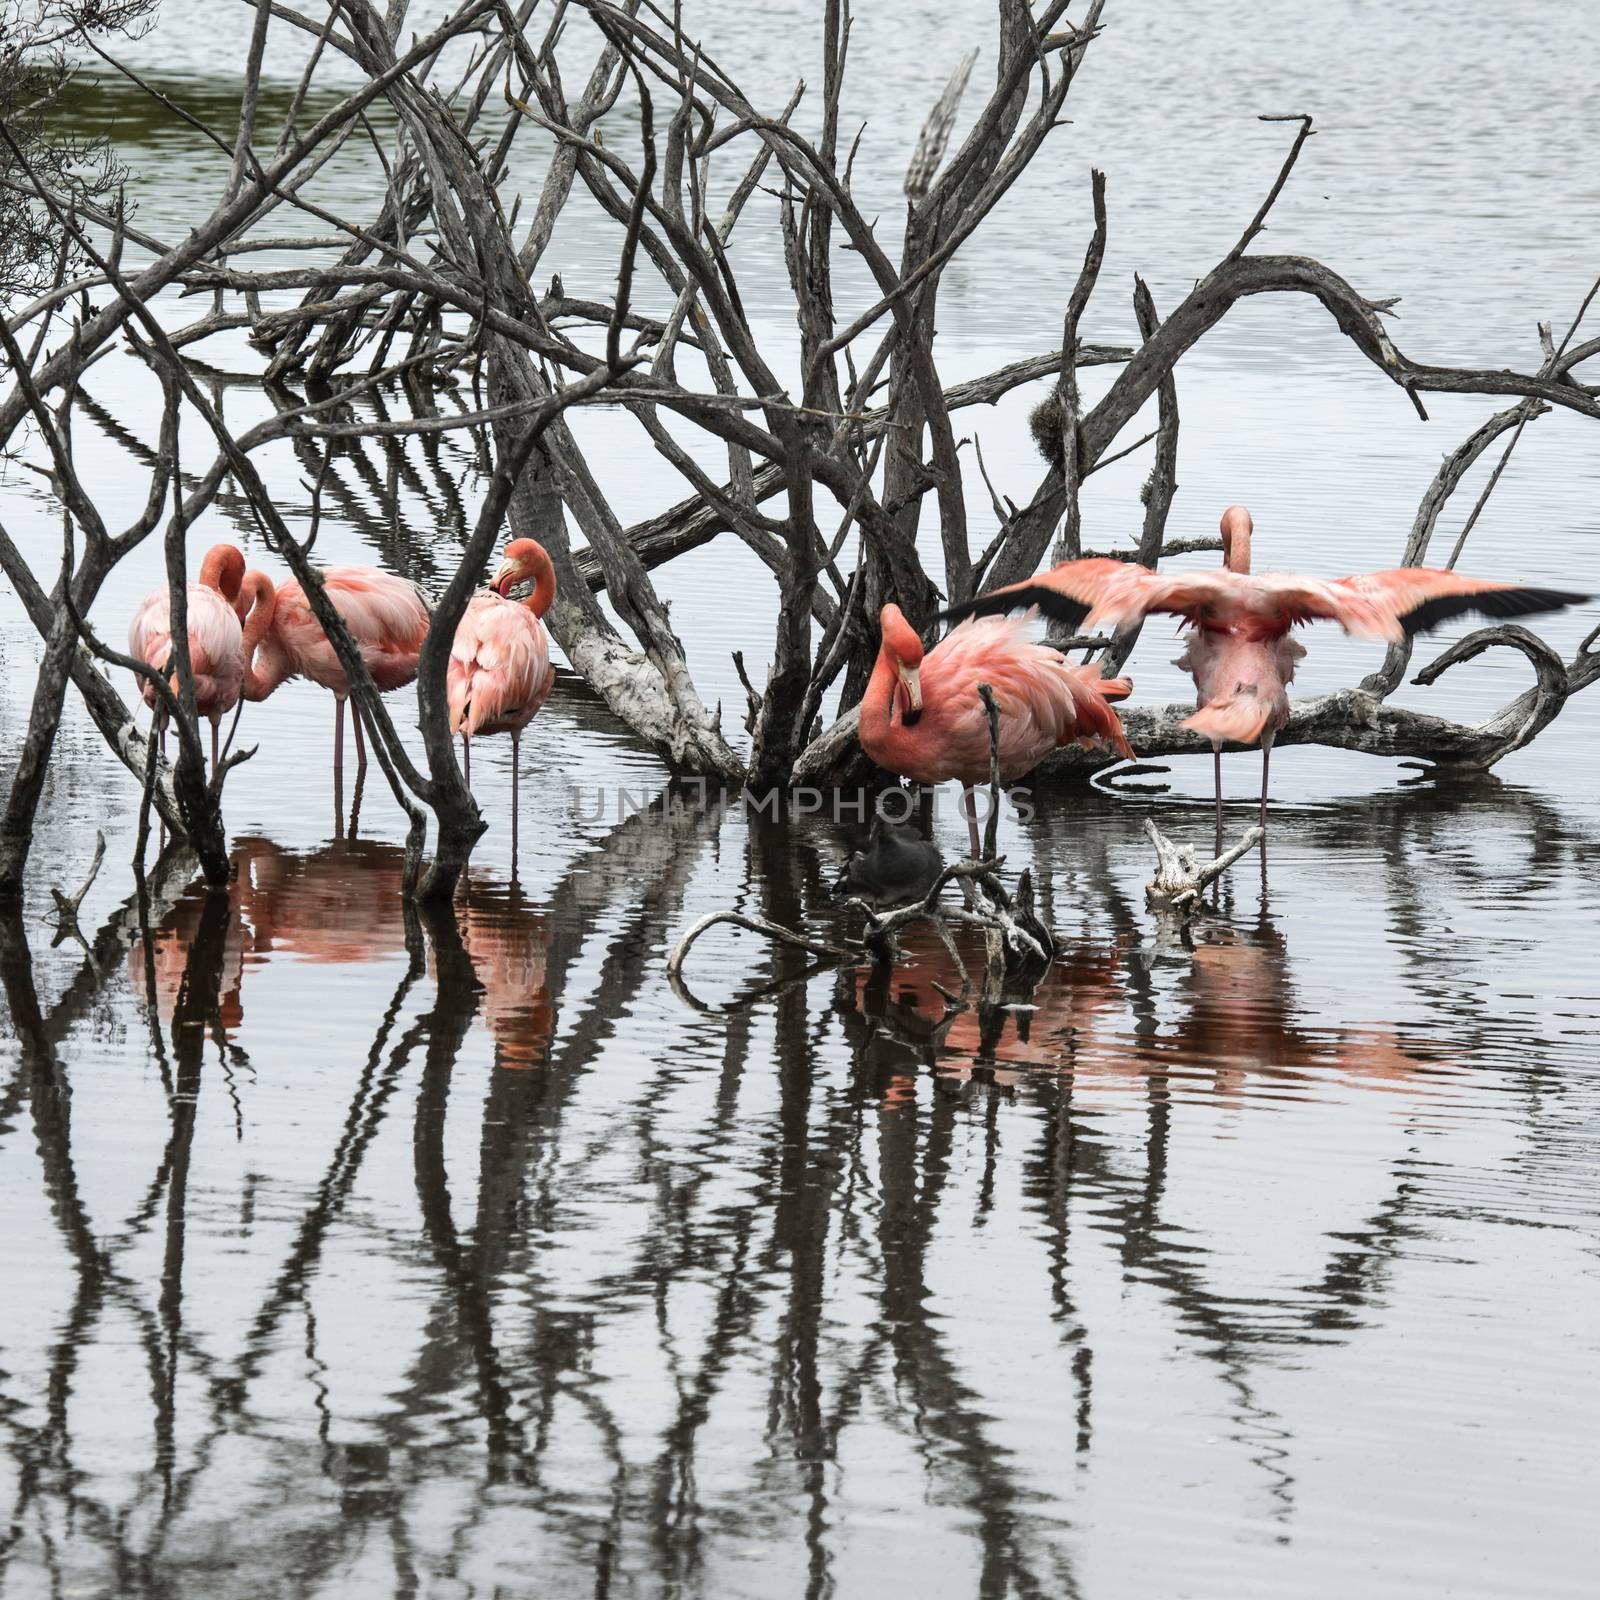 Flamingos have arrived to the island of Isabella, Galapagos Archipelago, Ecuador